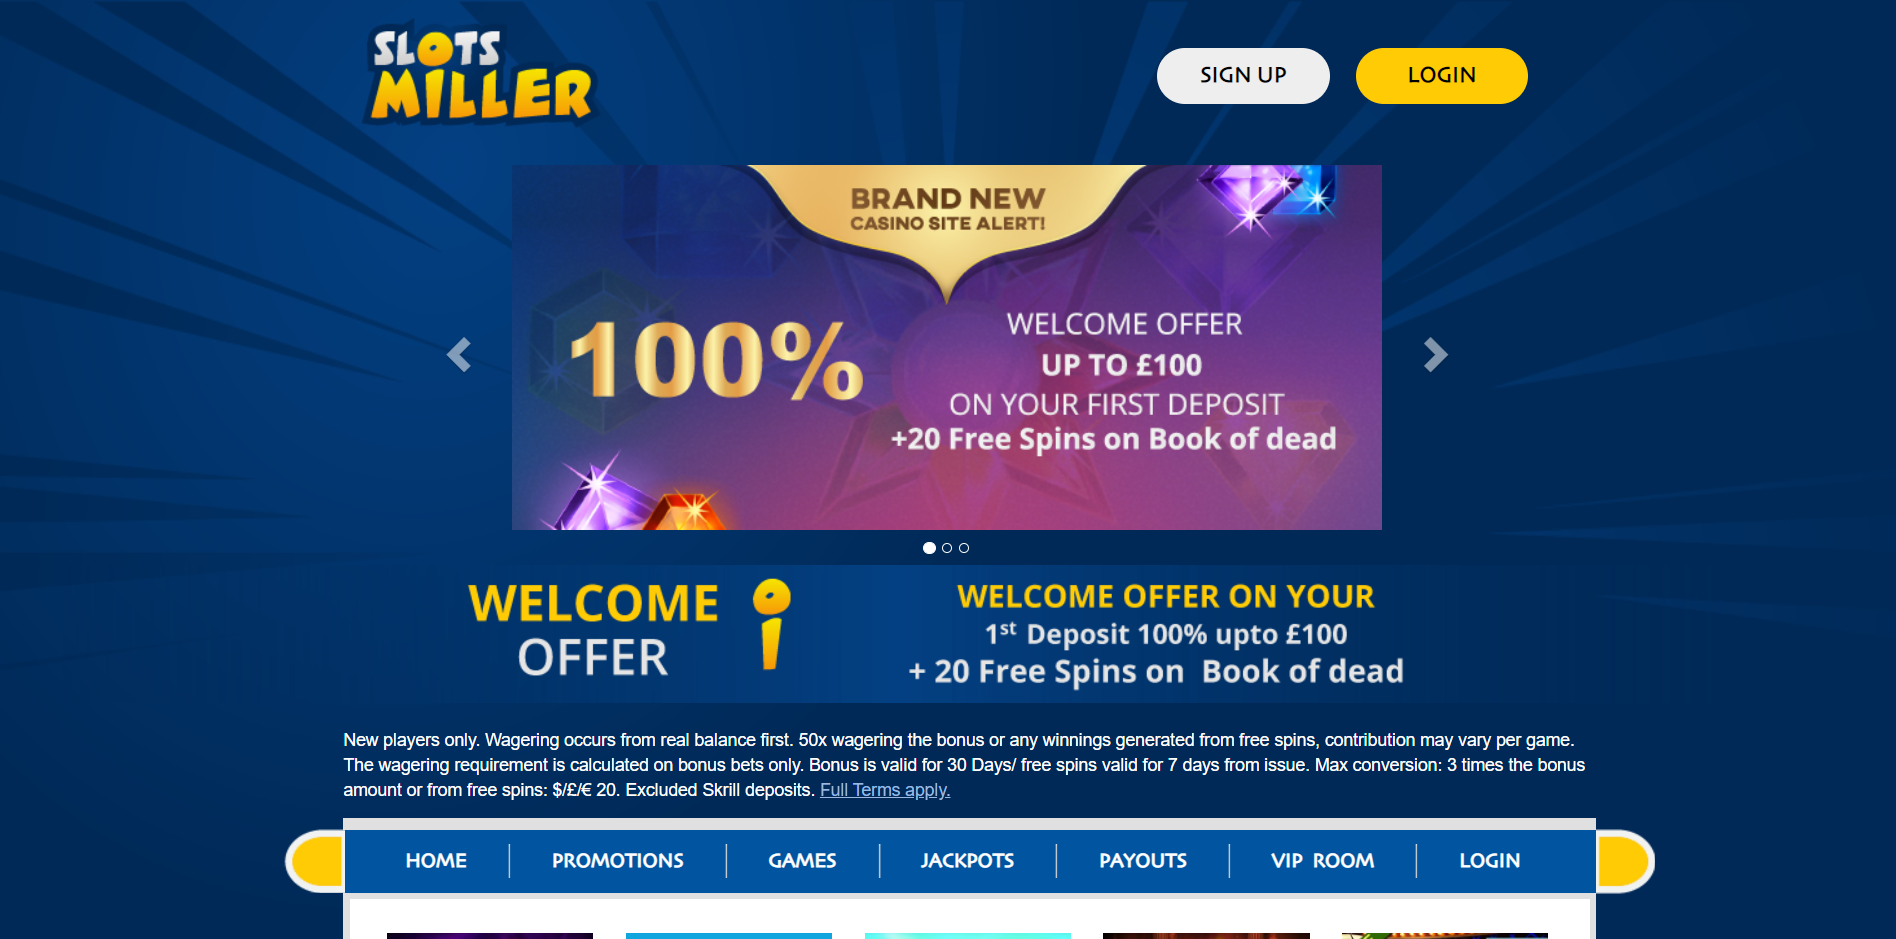 Slots Miller Casino Review